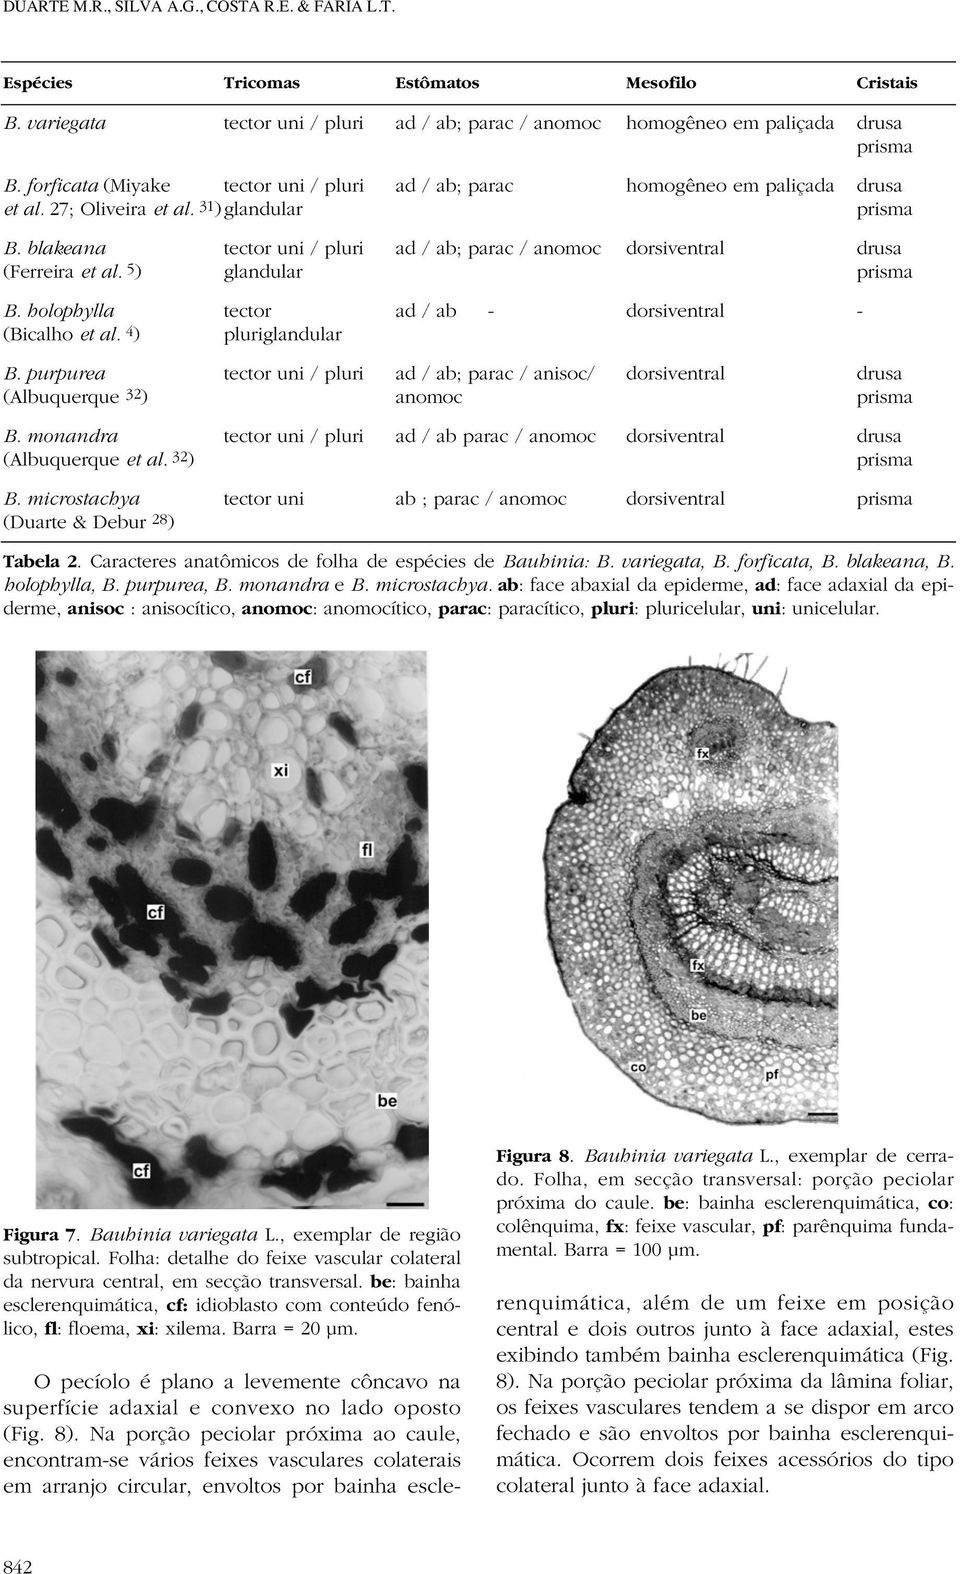 blakeana tector uni / pluri ad / ab; parac / anomoc dorsiventral drusa (Ferreira et al. 5 ) glandular prisma B. holophylla tector ad / ab - dorsiventral - (Bicalho et al. 4 ) pluriglandular B.